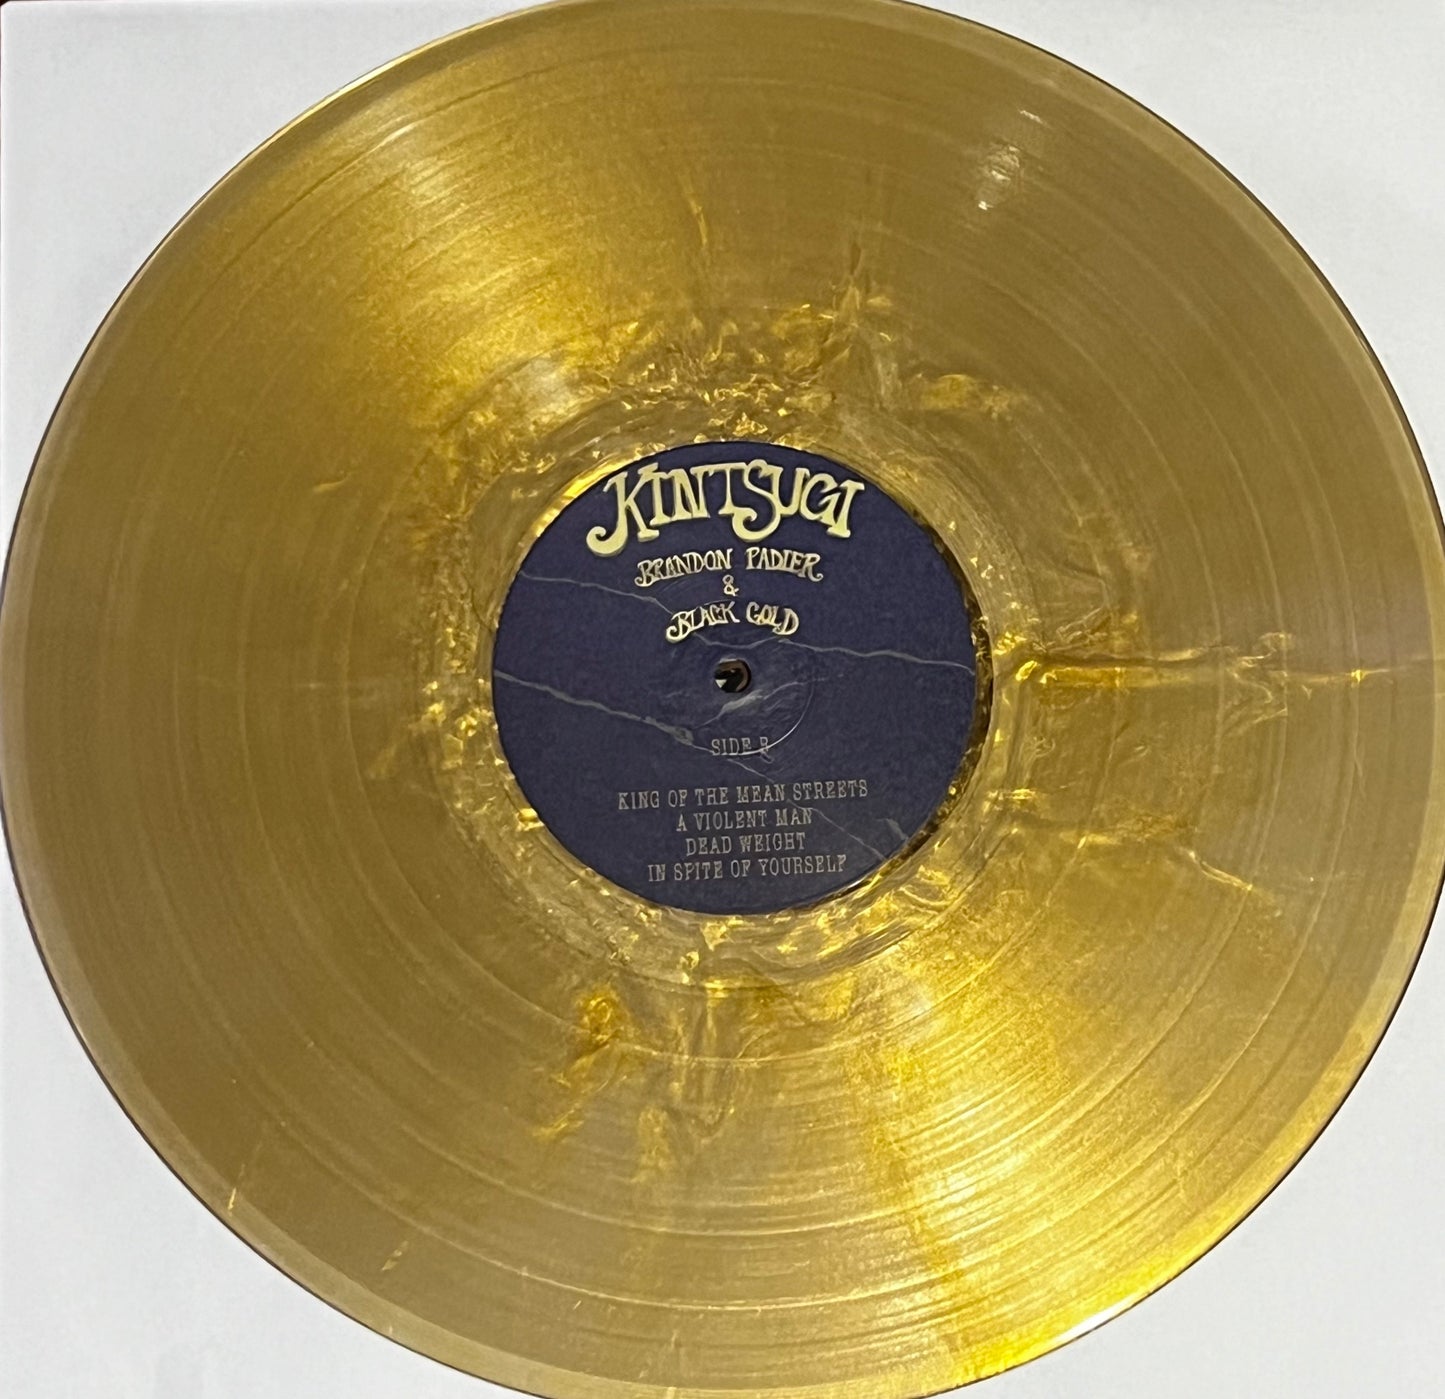 Brandon Padier and Black Gold - "Kintsugi" on 180 Gram Gold Swirl Vinyl